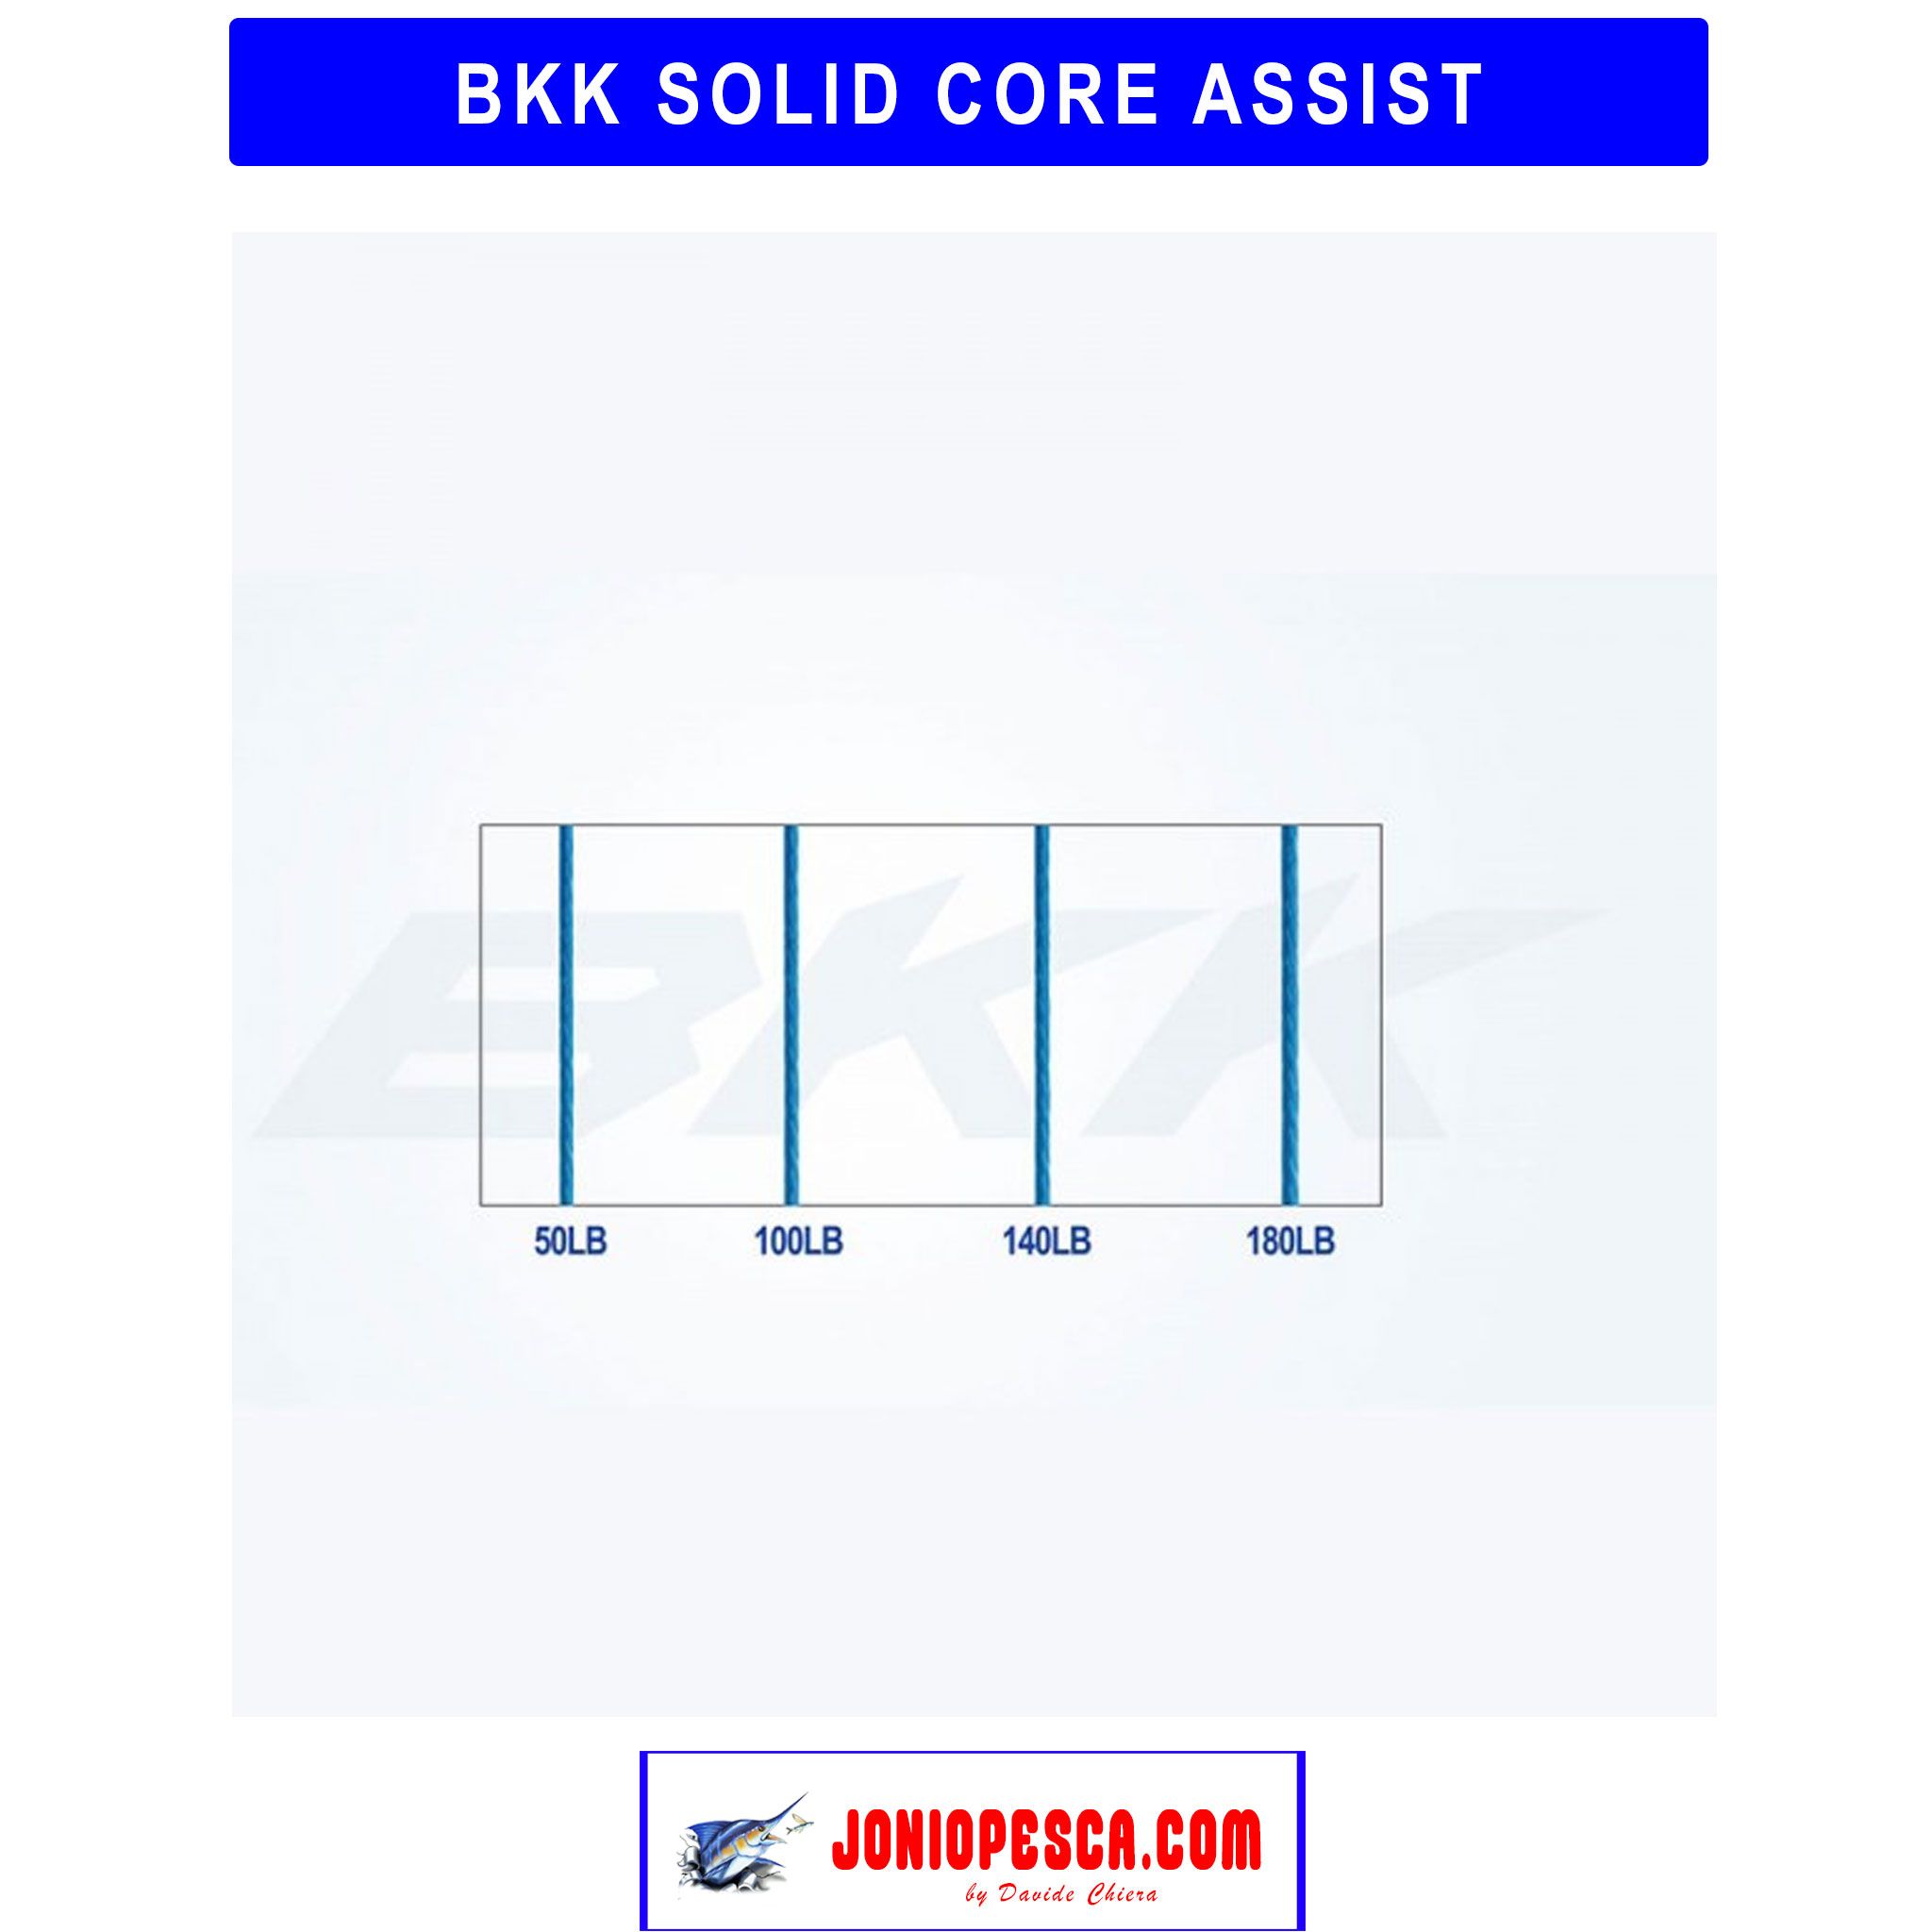 bkk-solid-core-assist-2